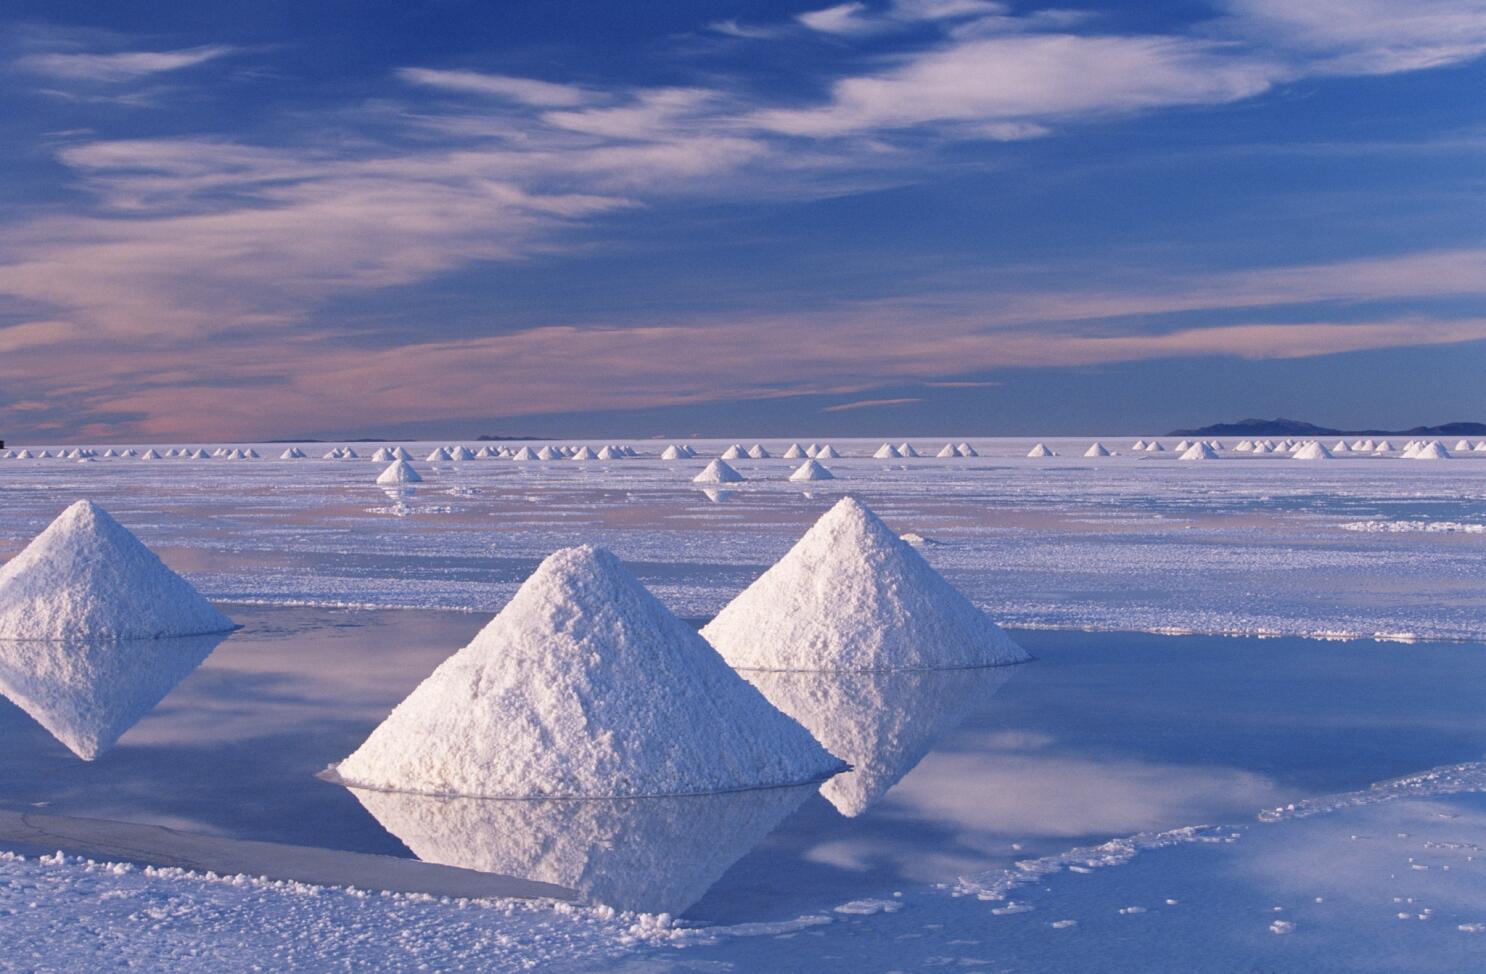 Reflective Surface of Salt Flats